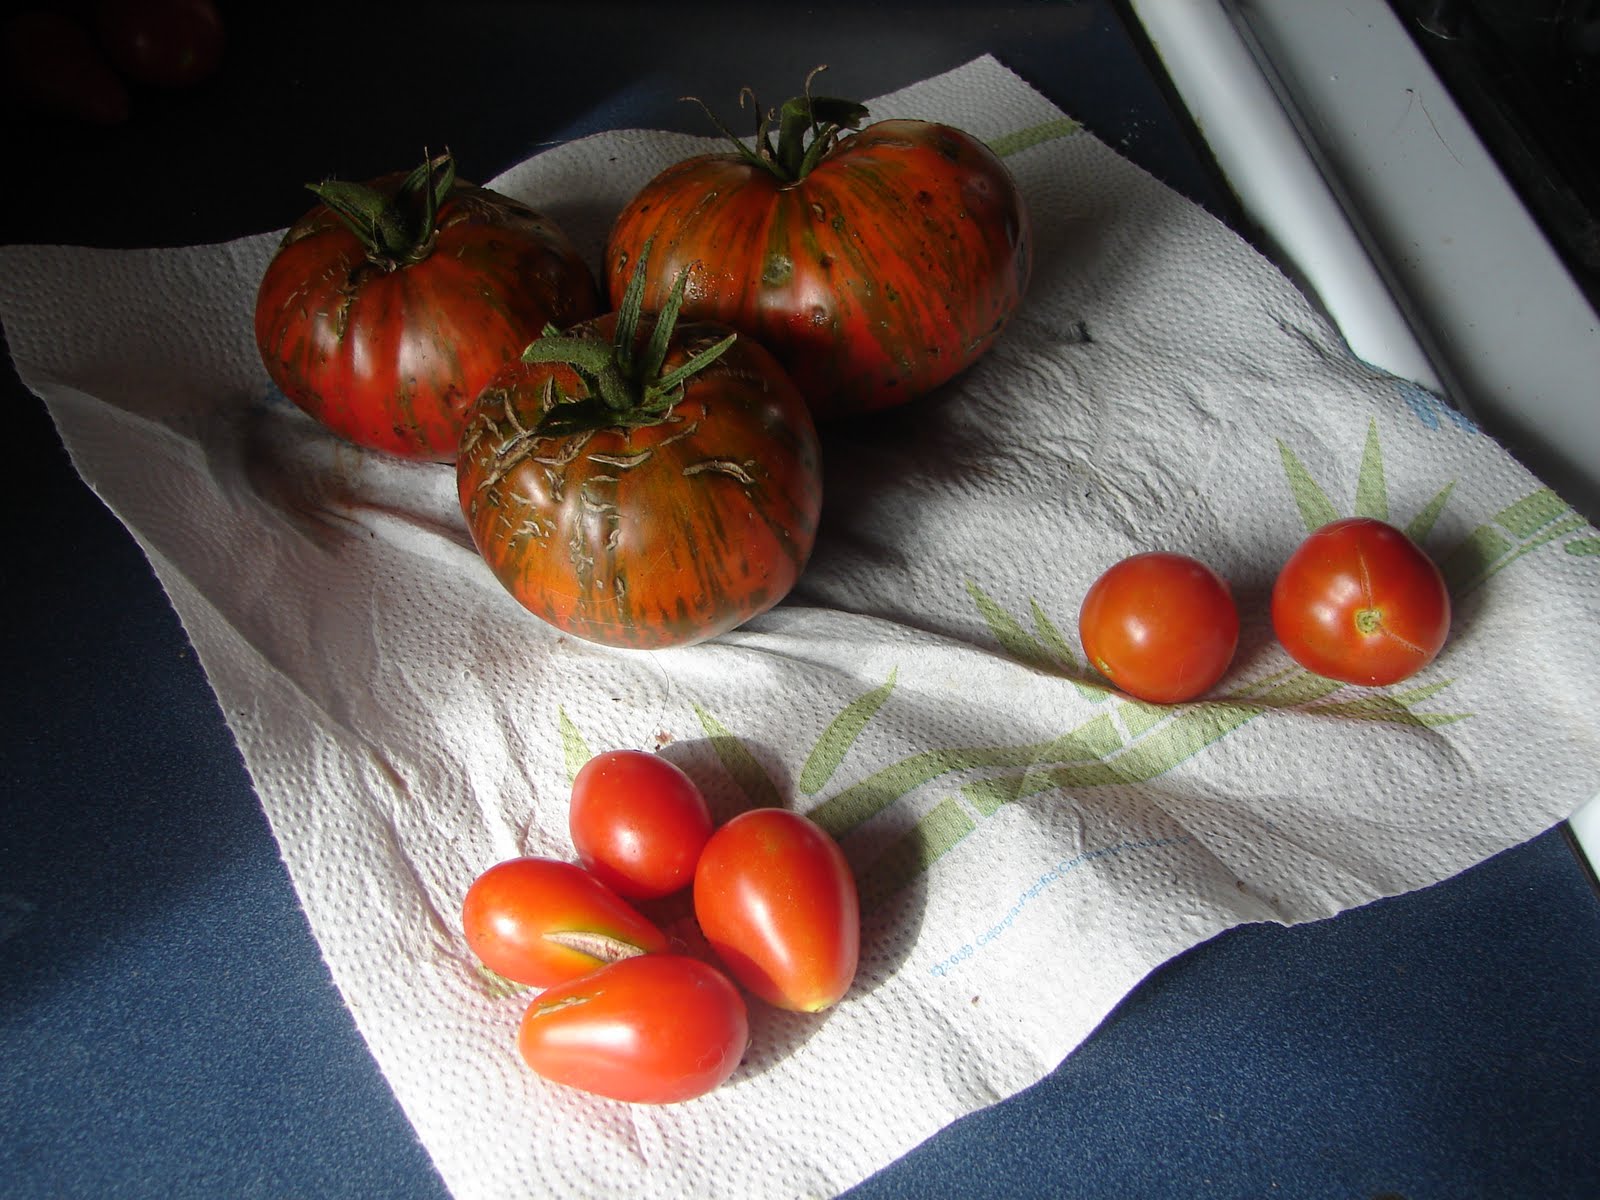 Tomatoes+8-24-11+003.jpg